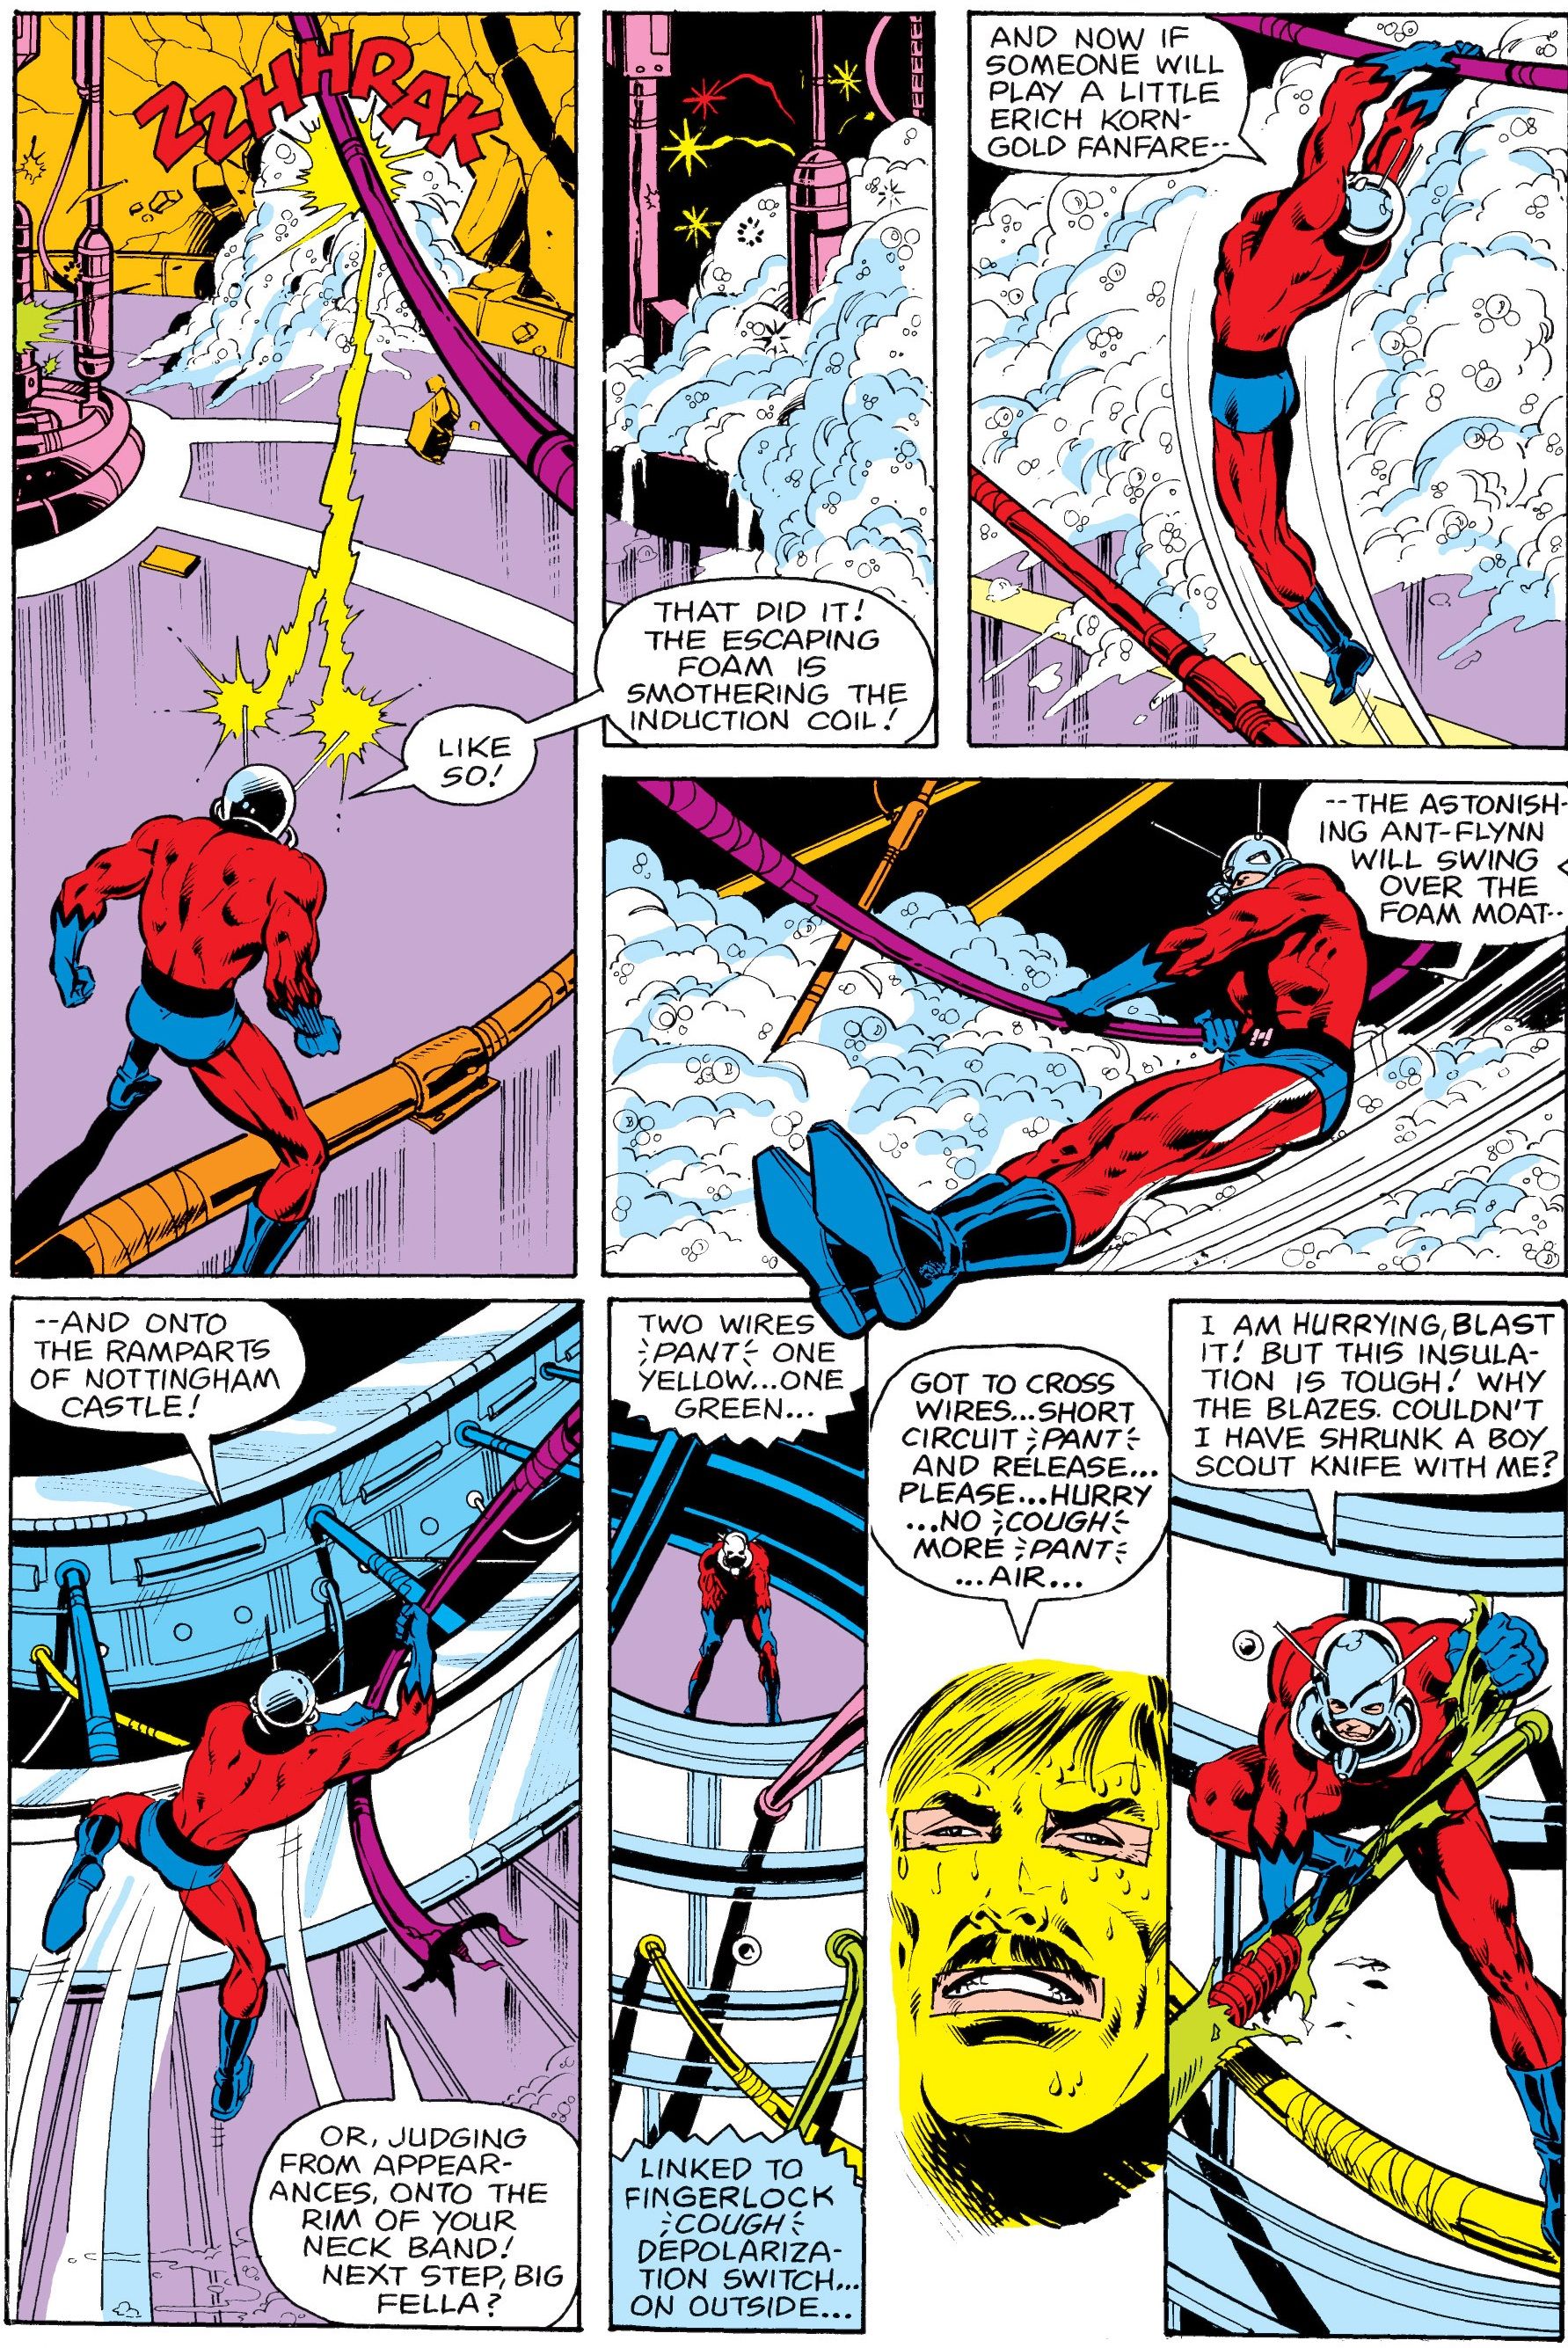 Какая забытая главная черта характера когда-то была у Человека-муравья из Marvel?